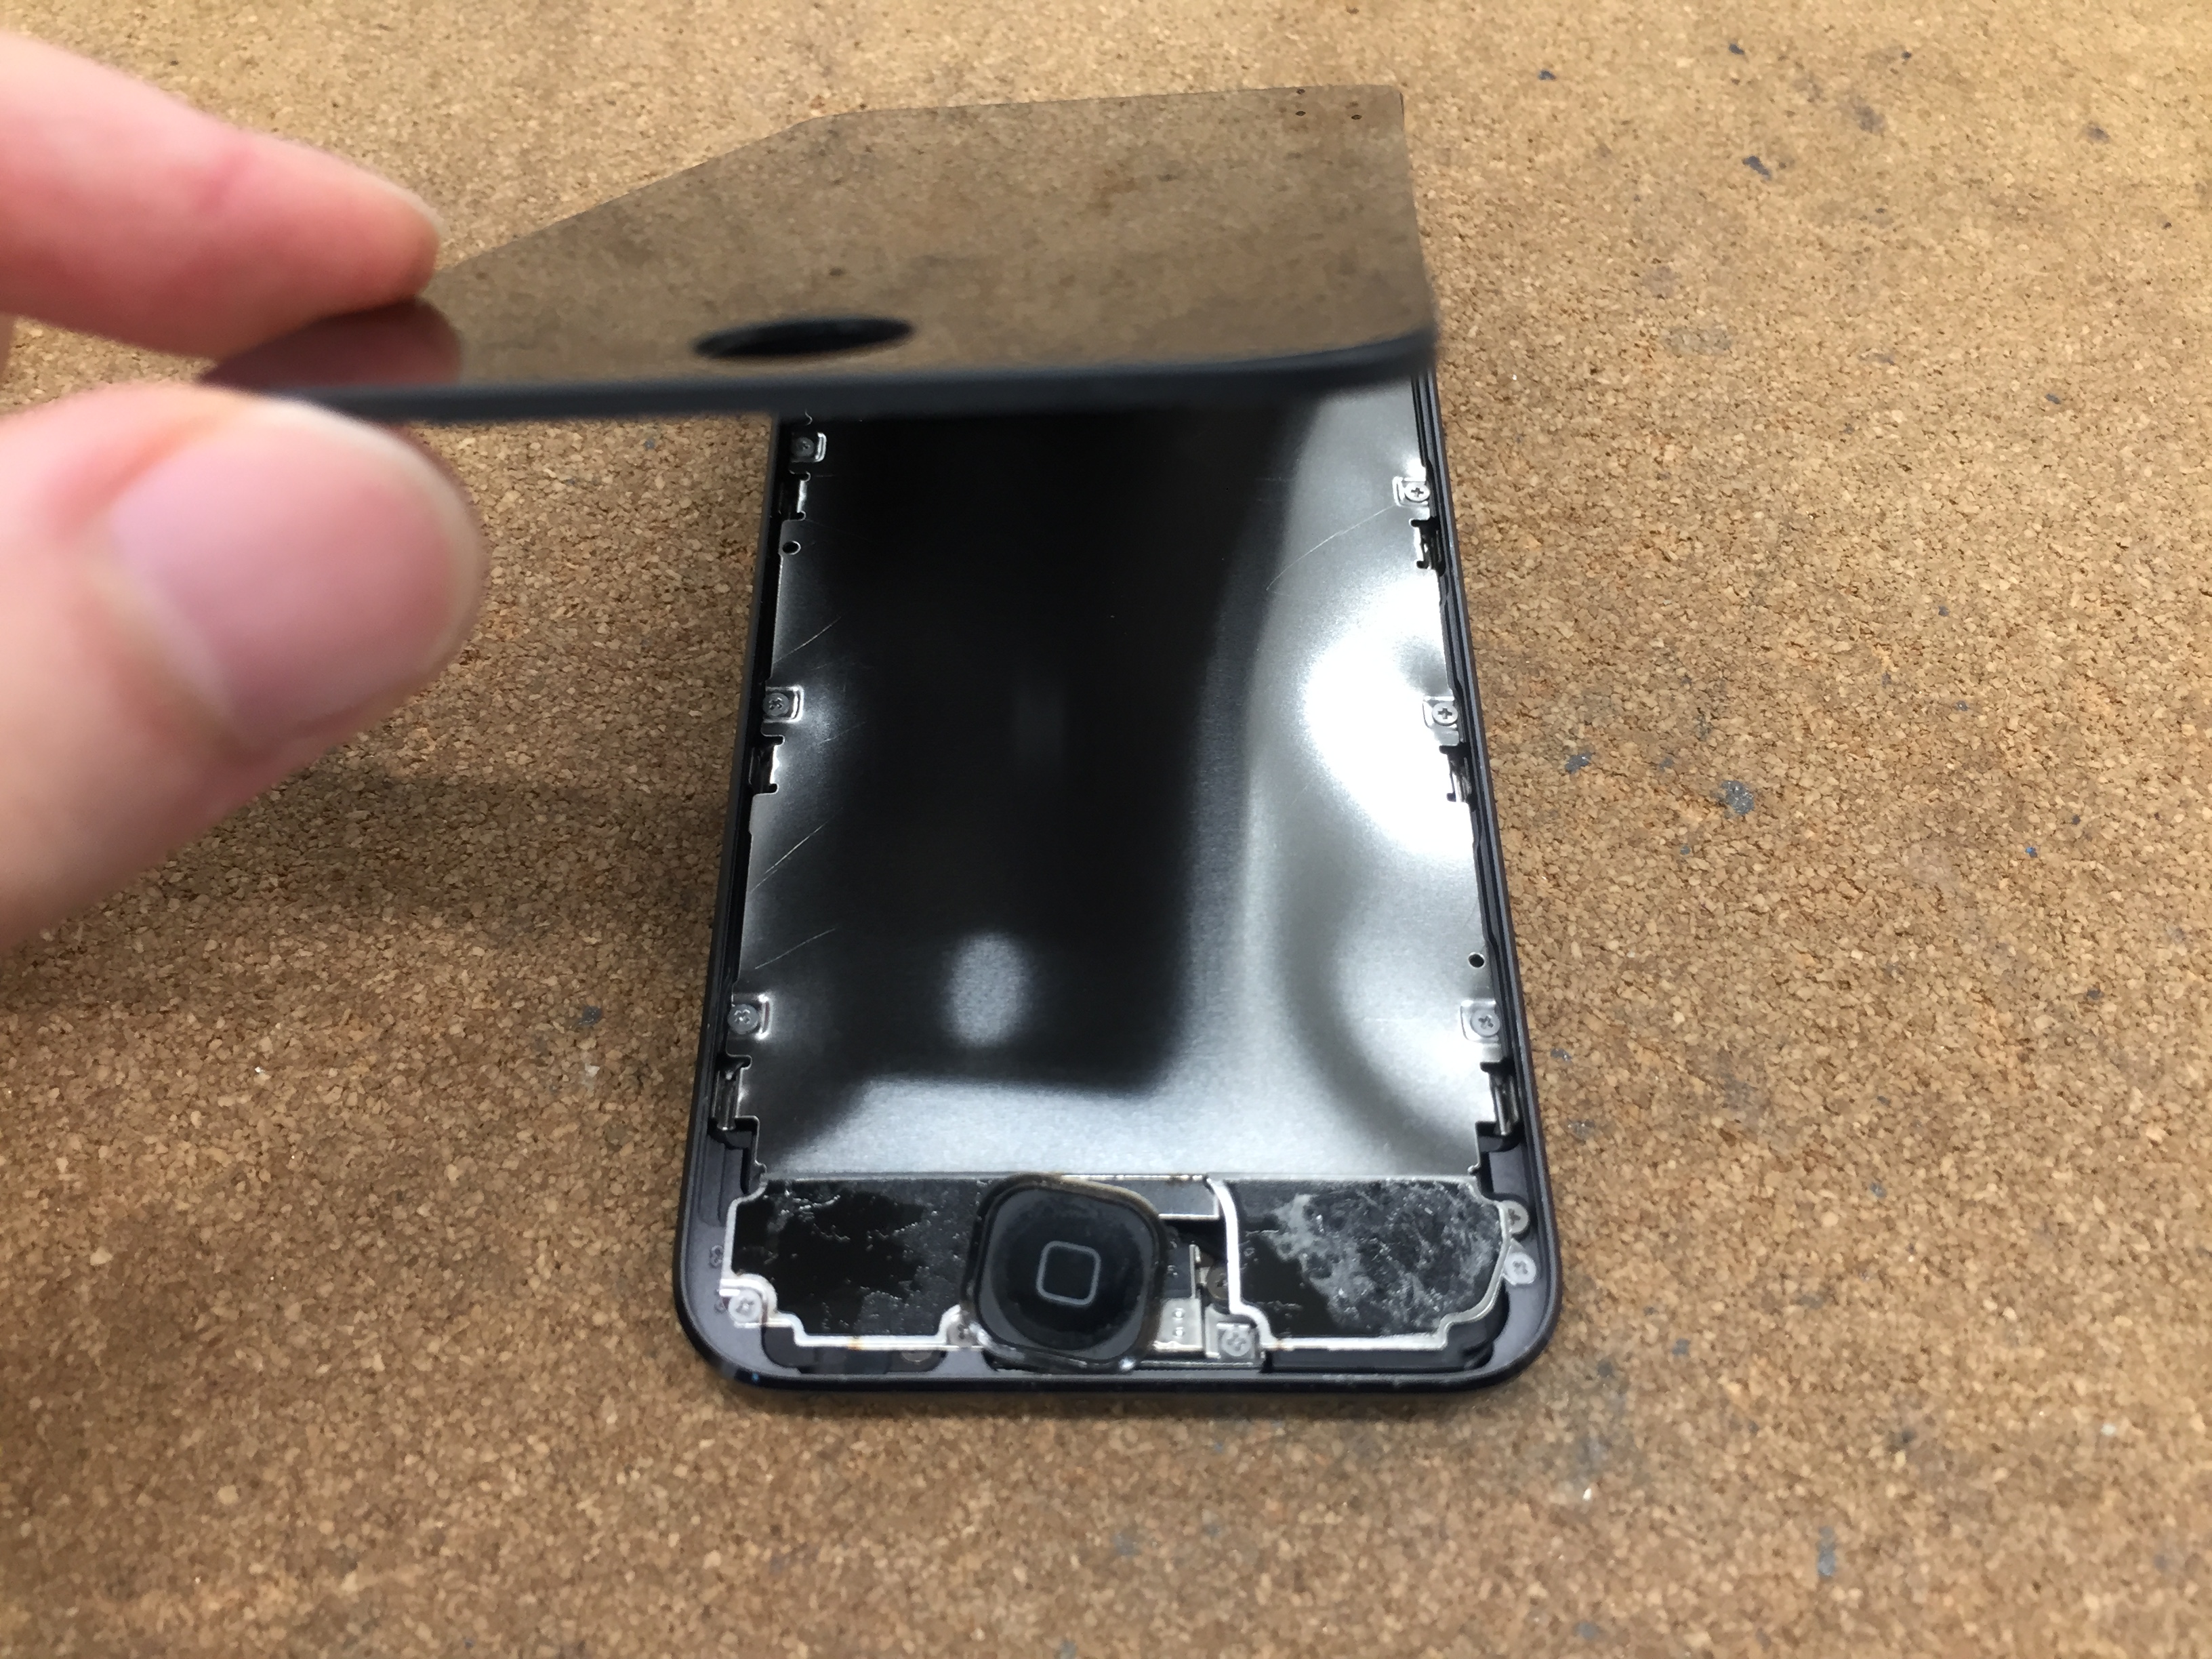 Ipodtouch6のバッテリー膨張とホームボタンが陥没して押せない アイポッドタッチの修理ならapplejuice Iphone Ipad Ipod Mac修理 データ復旧 基板修理 Applejuice吉祥寺店